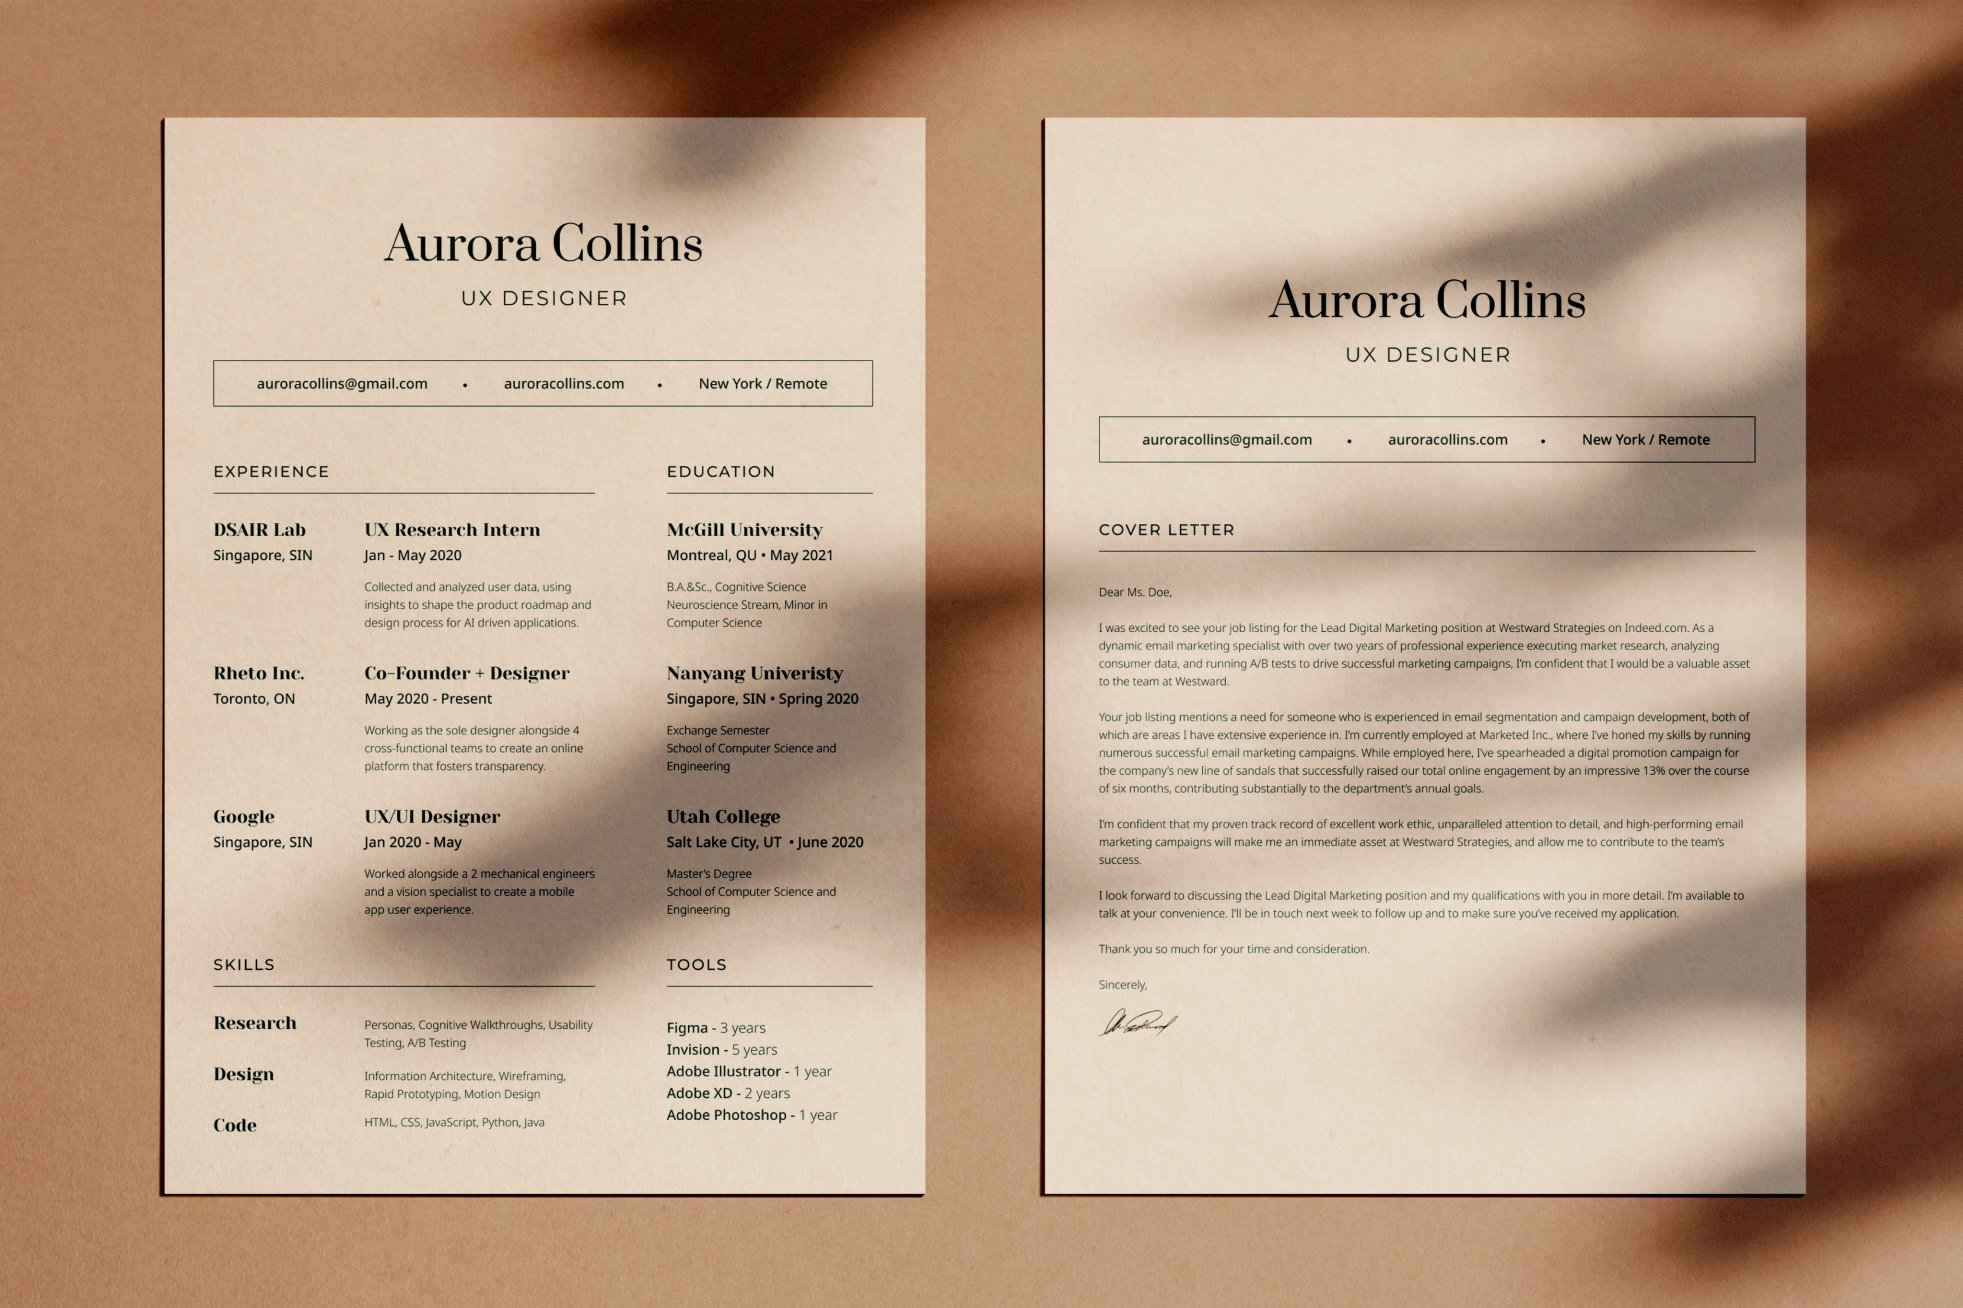 Aurora - Resume • CV • Cover Letter preview image.